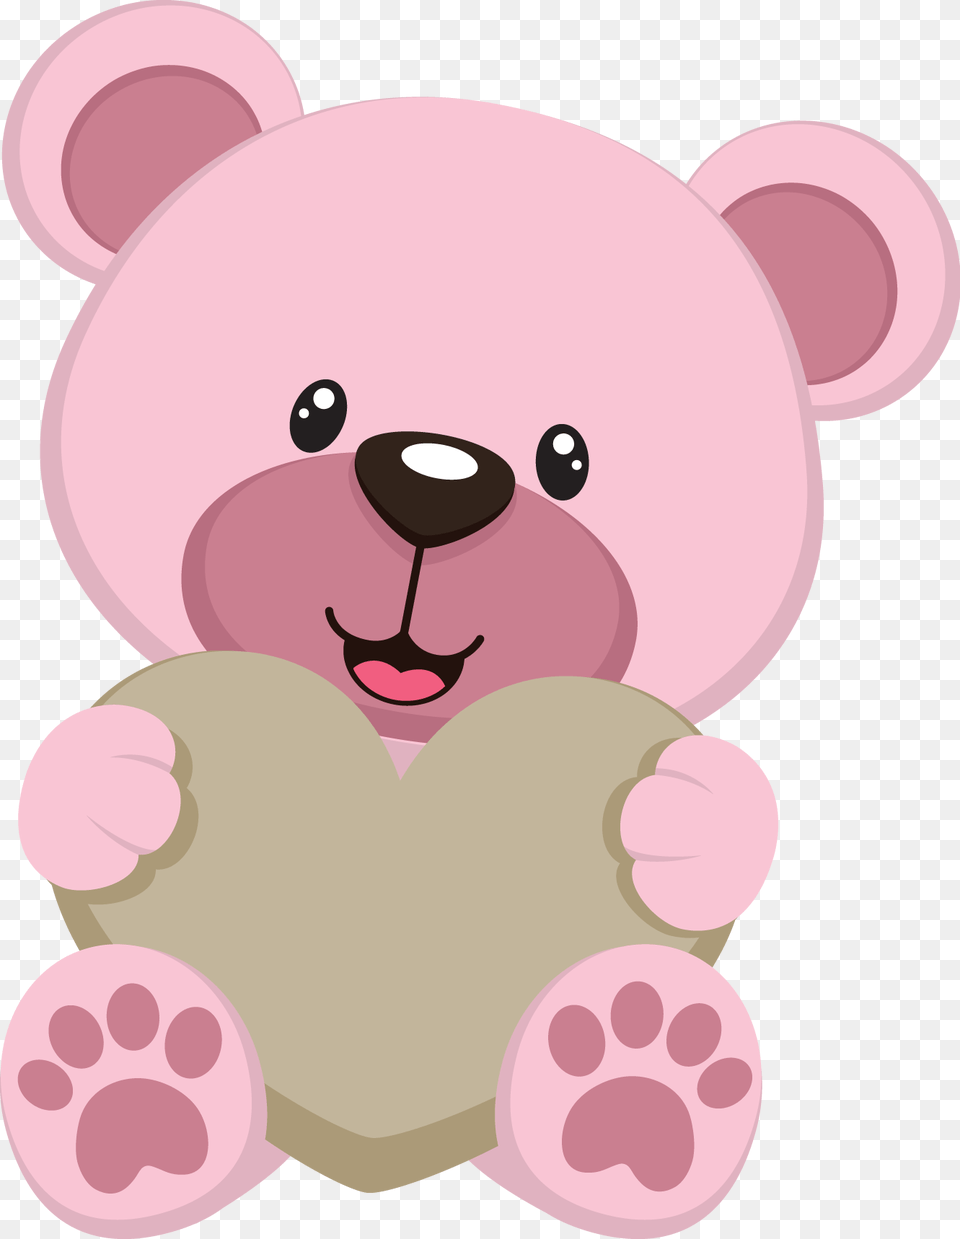 Bear Clipart Teddy Bear Party Cute Teddy Bears Teddy Pink Teddy Bear Clipart, Teddy Bear, Toy, Nature, Outdoors Free Png